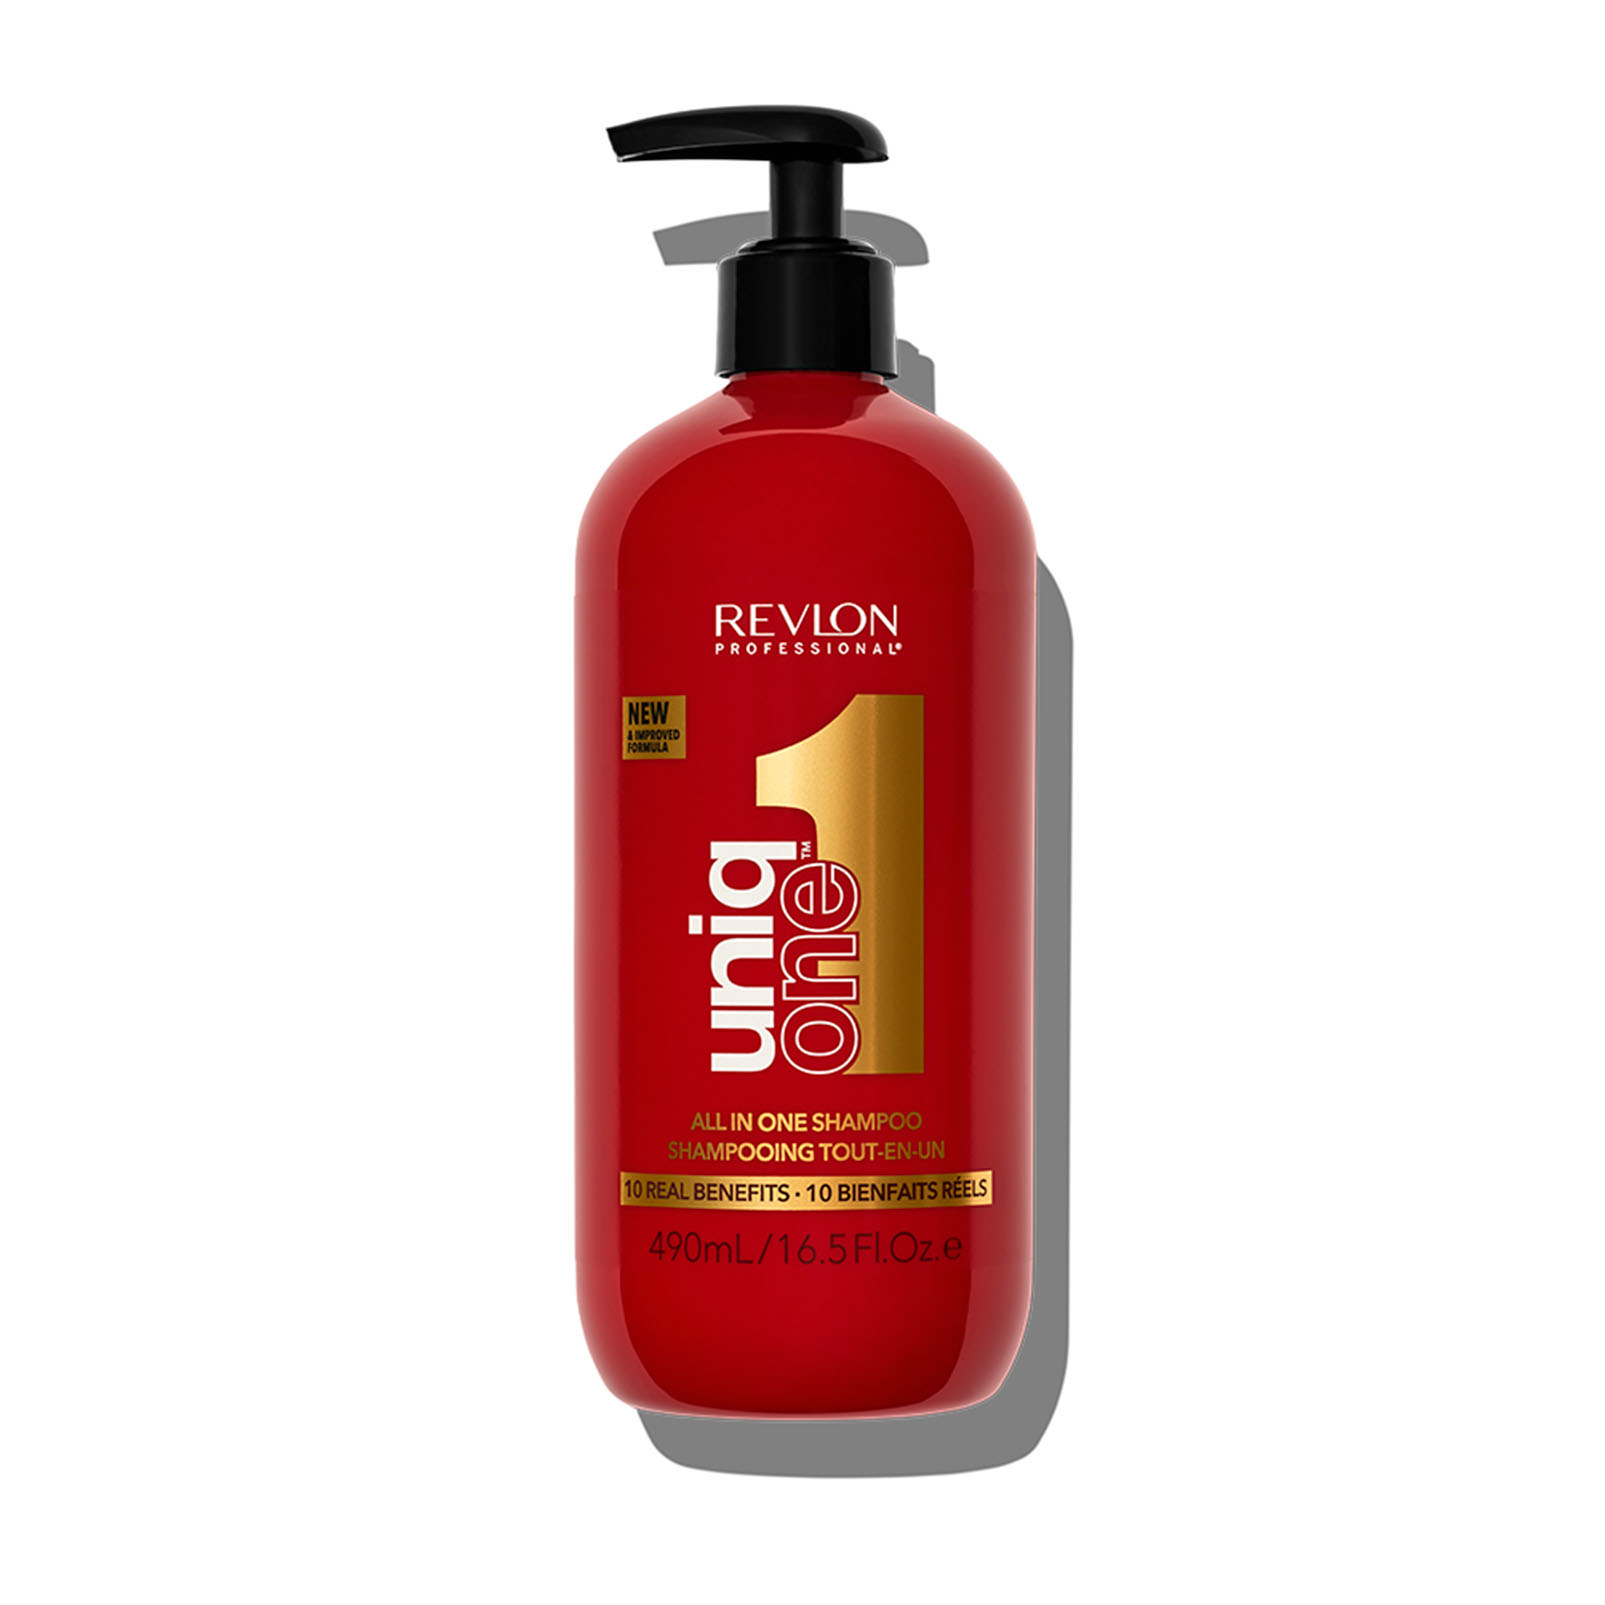 Revlon UniqOne All in one Shampoo